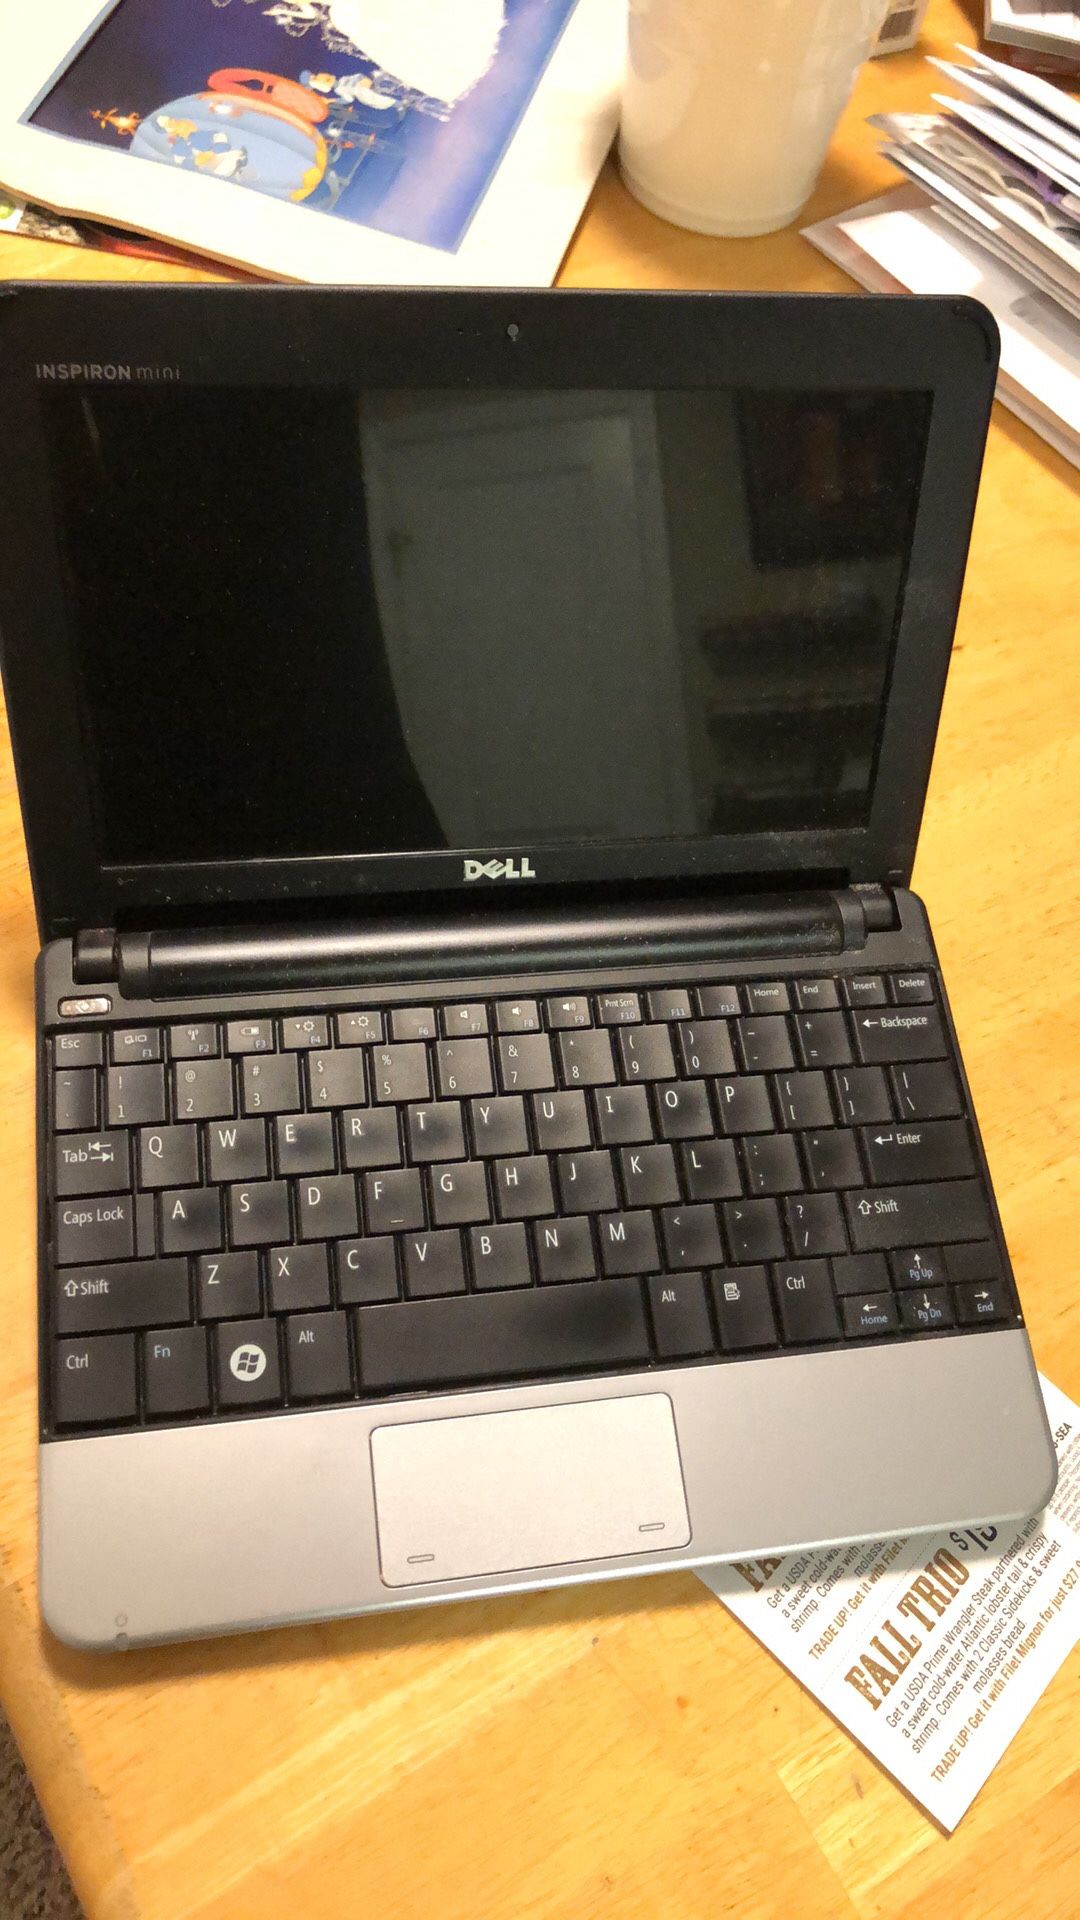 Dell Inspiron mini laptop PENDING